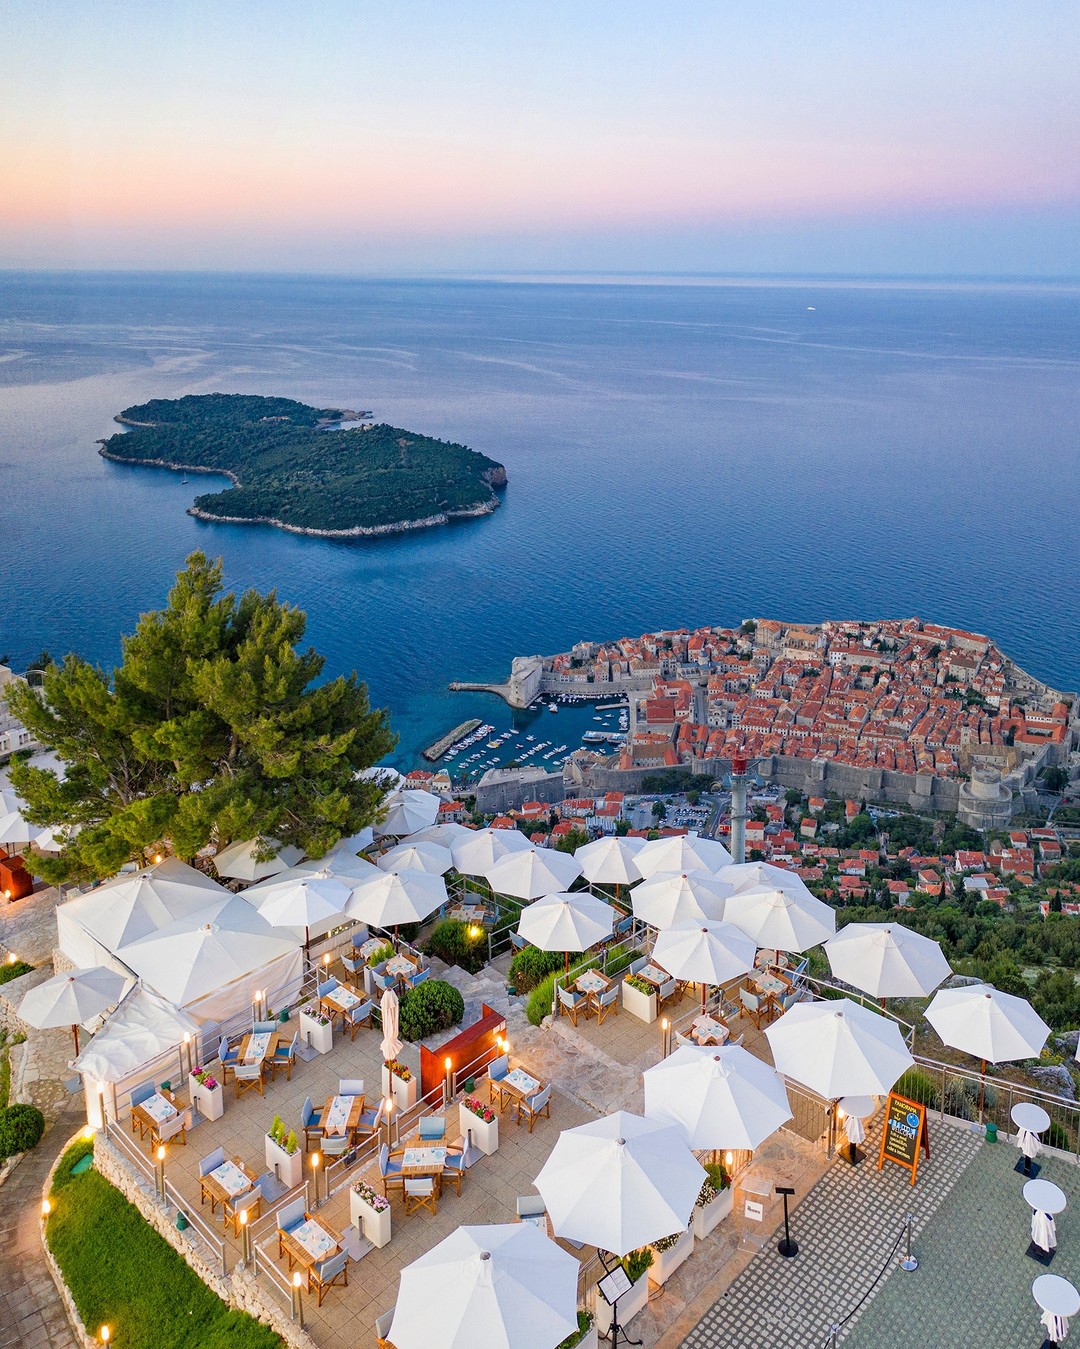 Panorama Restaurant and Bar, Dubrovnik - Europe's 20 Best Outdoor Restaurants